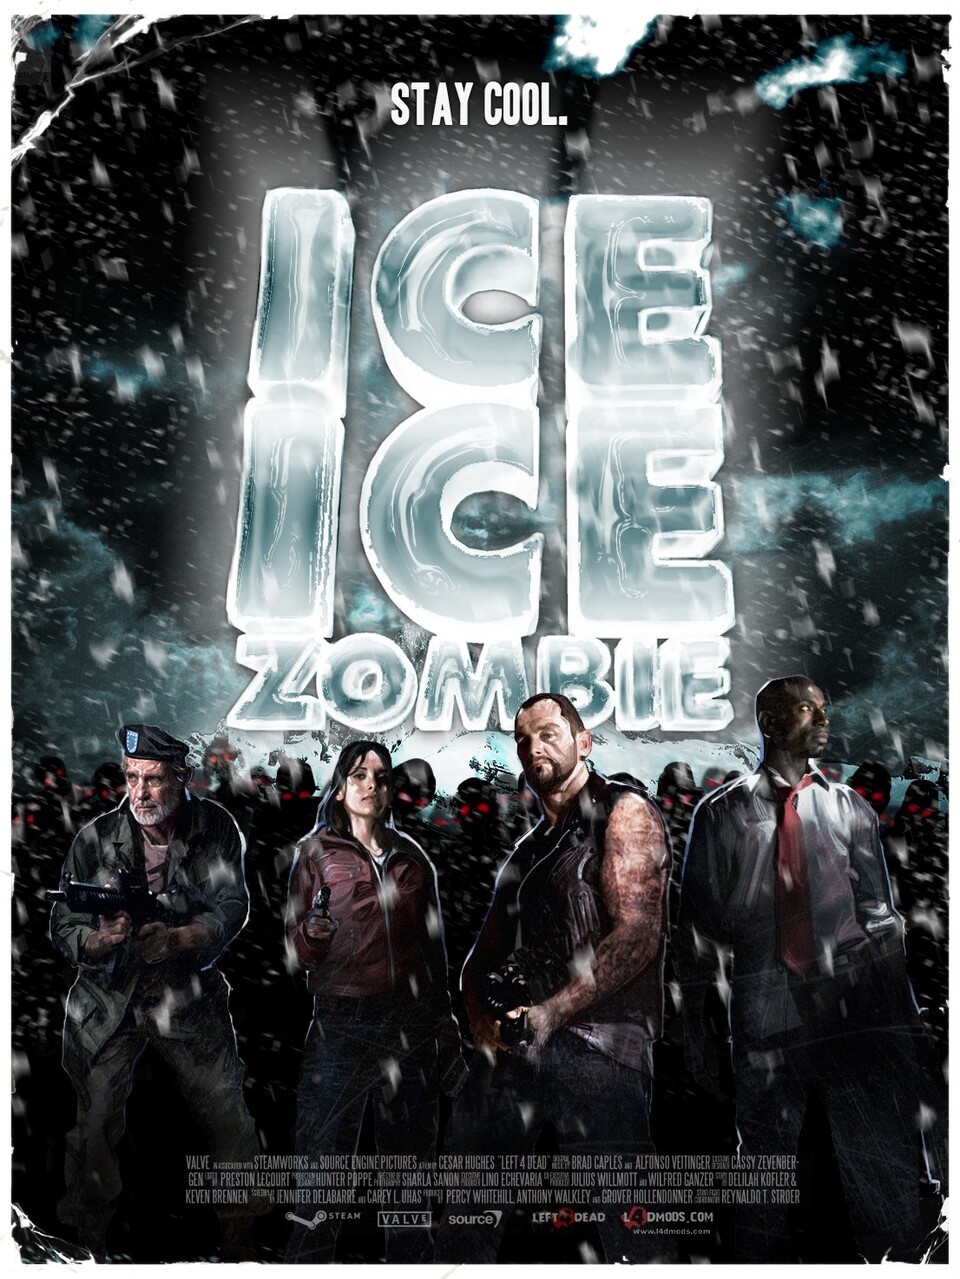 Ice Ice Zombie von Sebastian Heinicke.